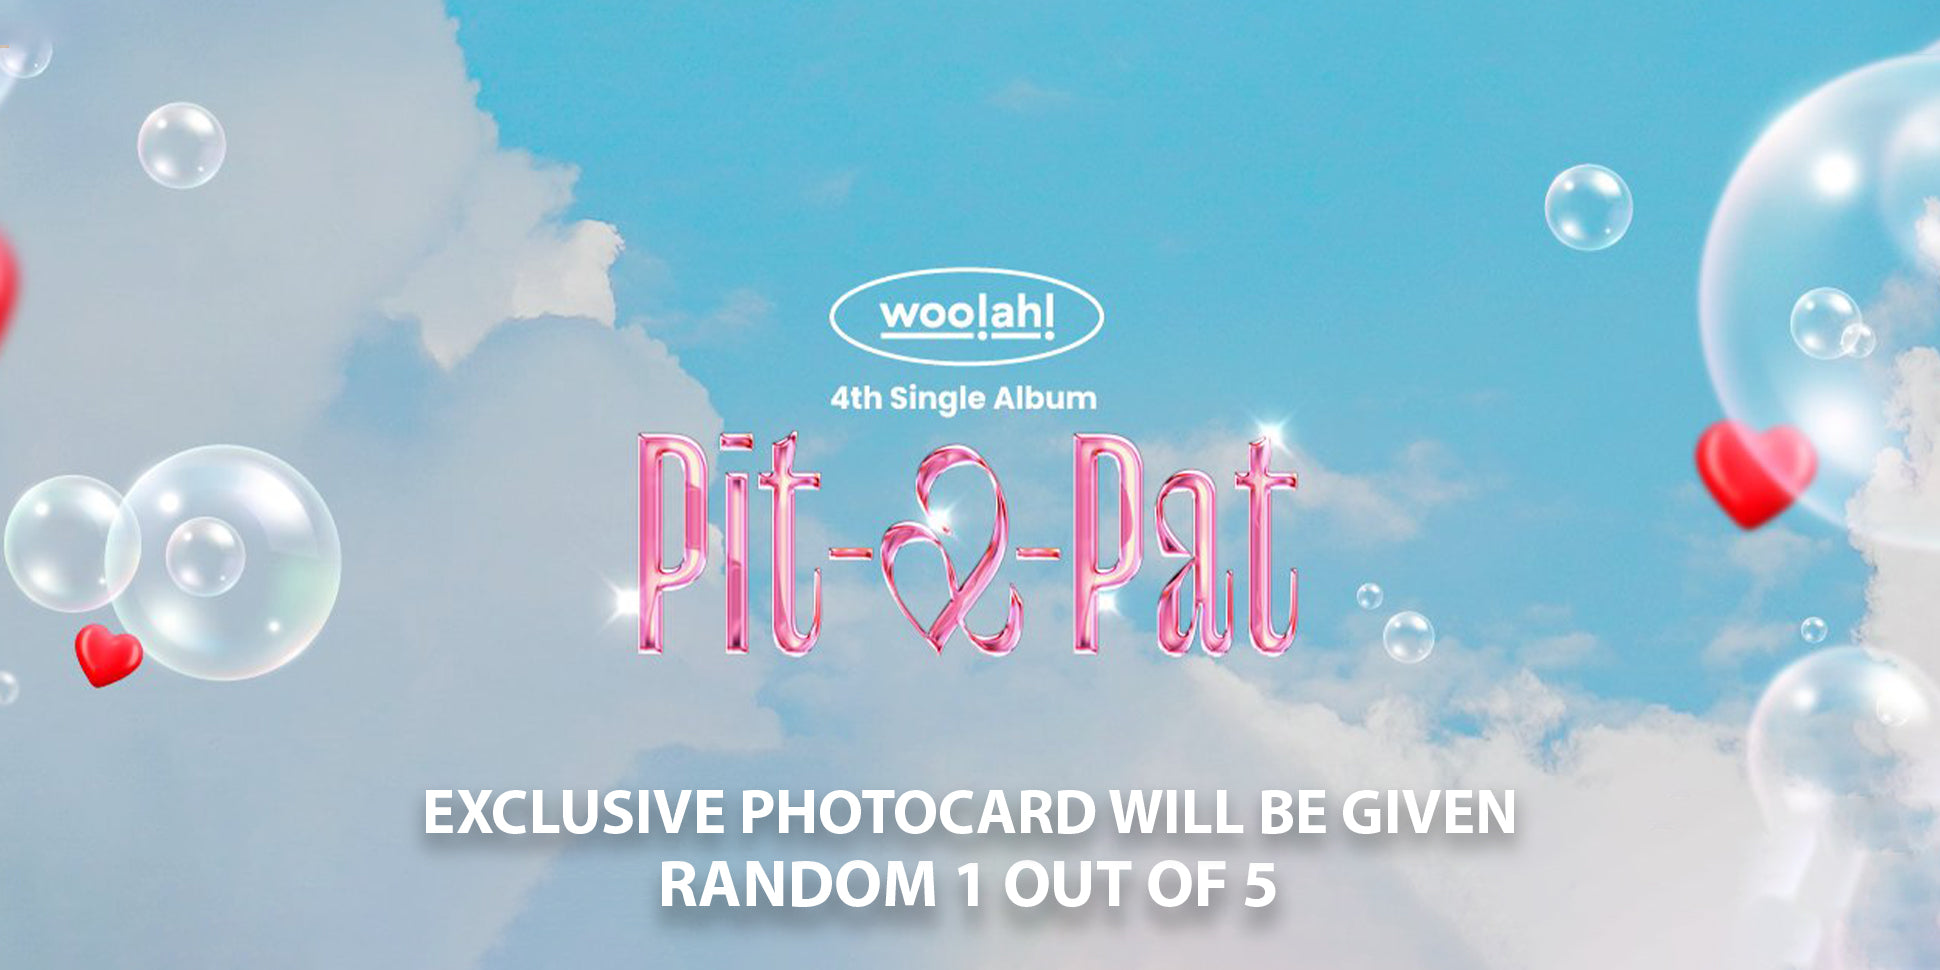 WOO!AH! 4TH SINGLE ALBUM 'PIT-A-PAT' EVENT